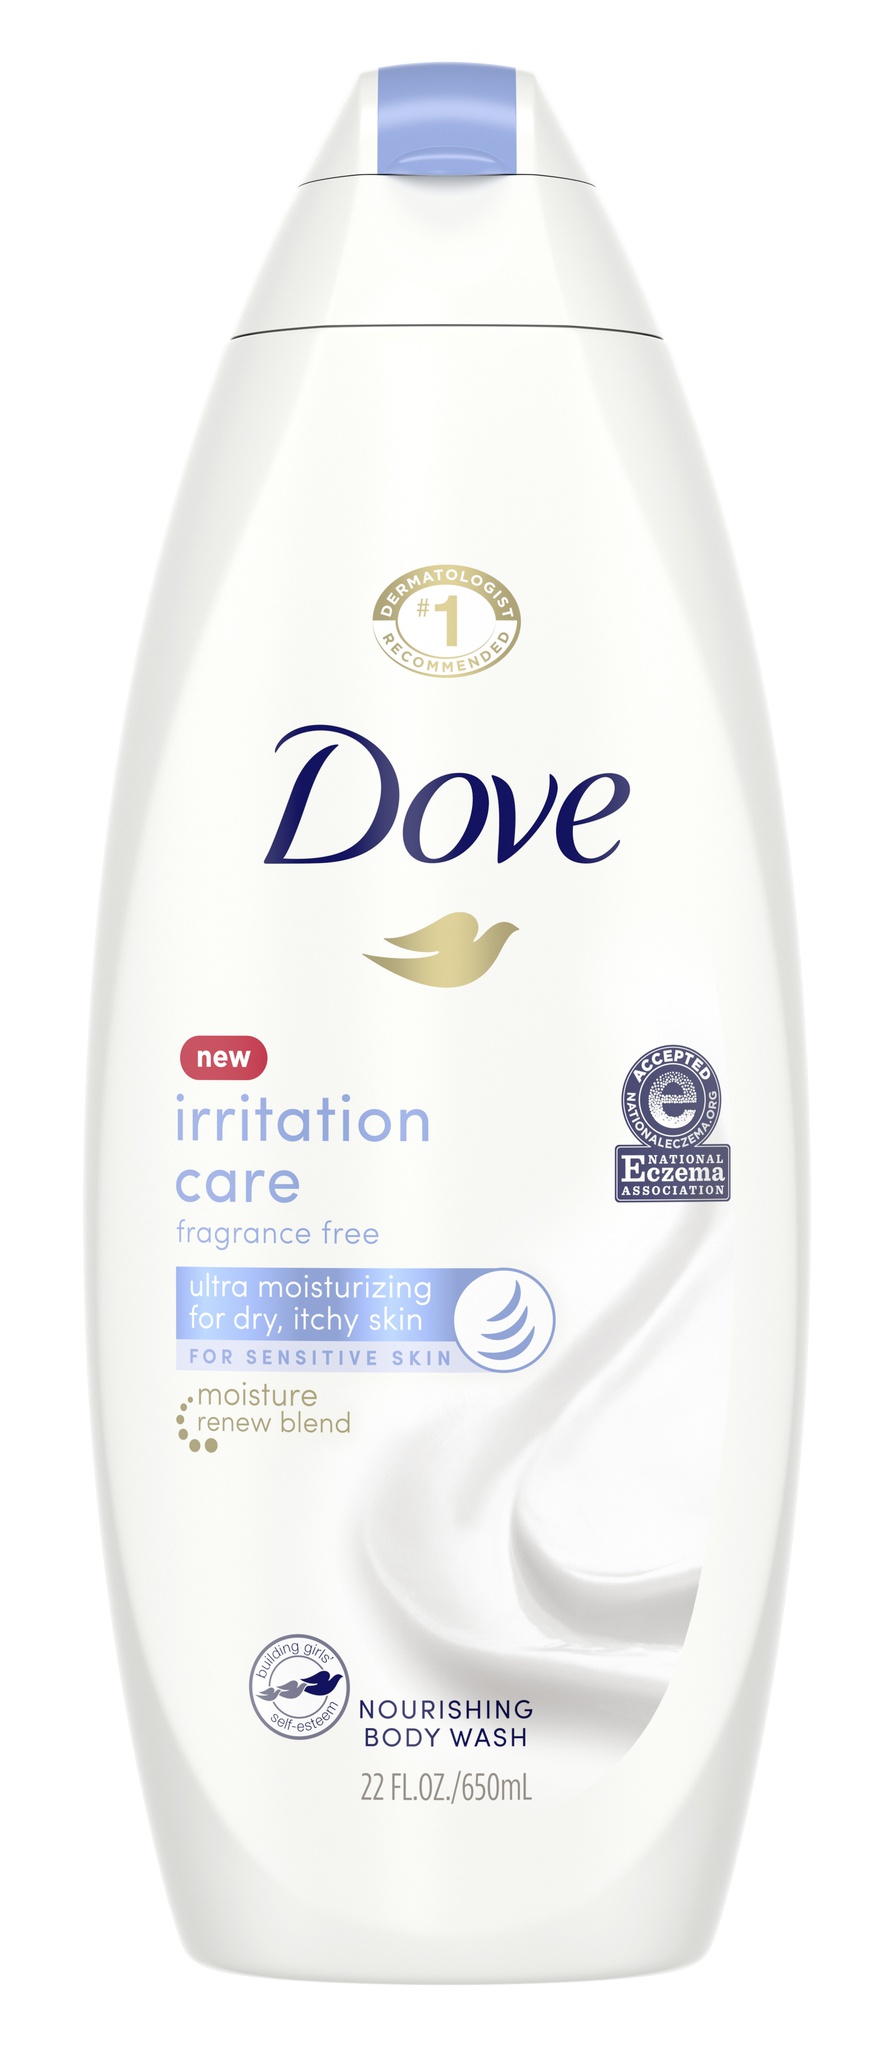 Dove Irritation Care Body Wash